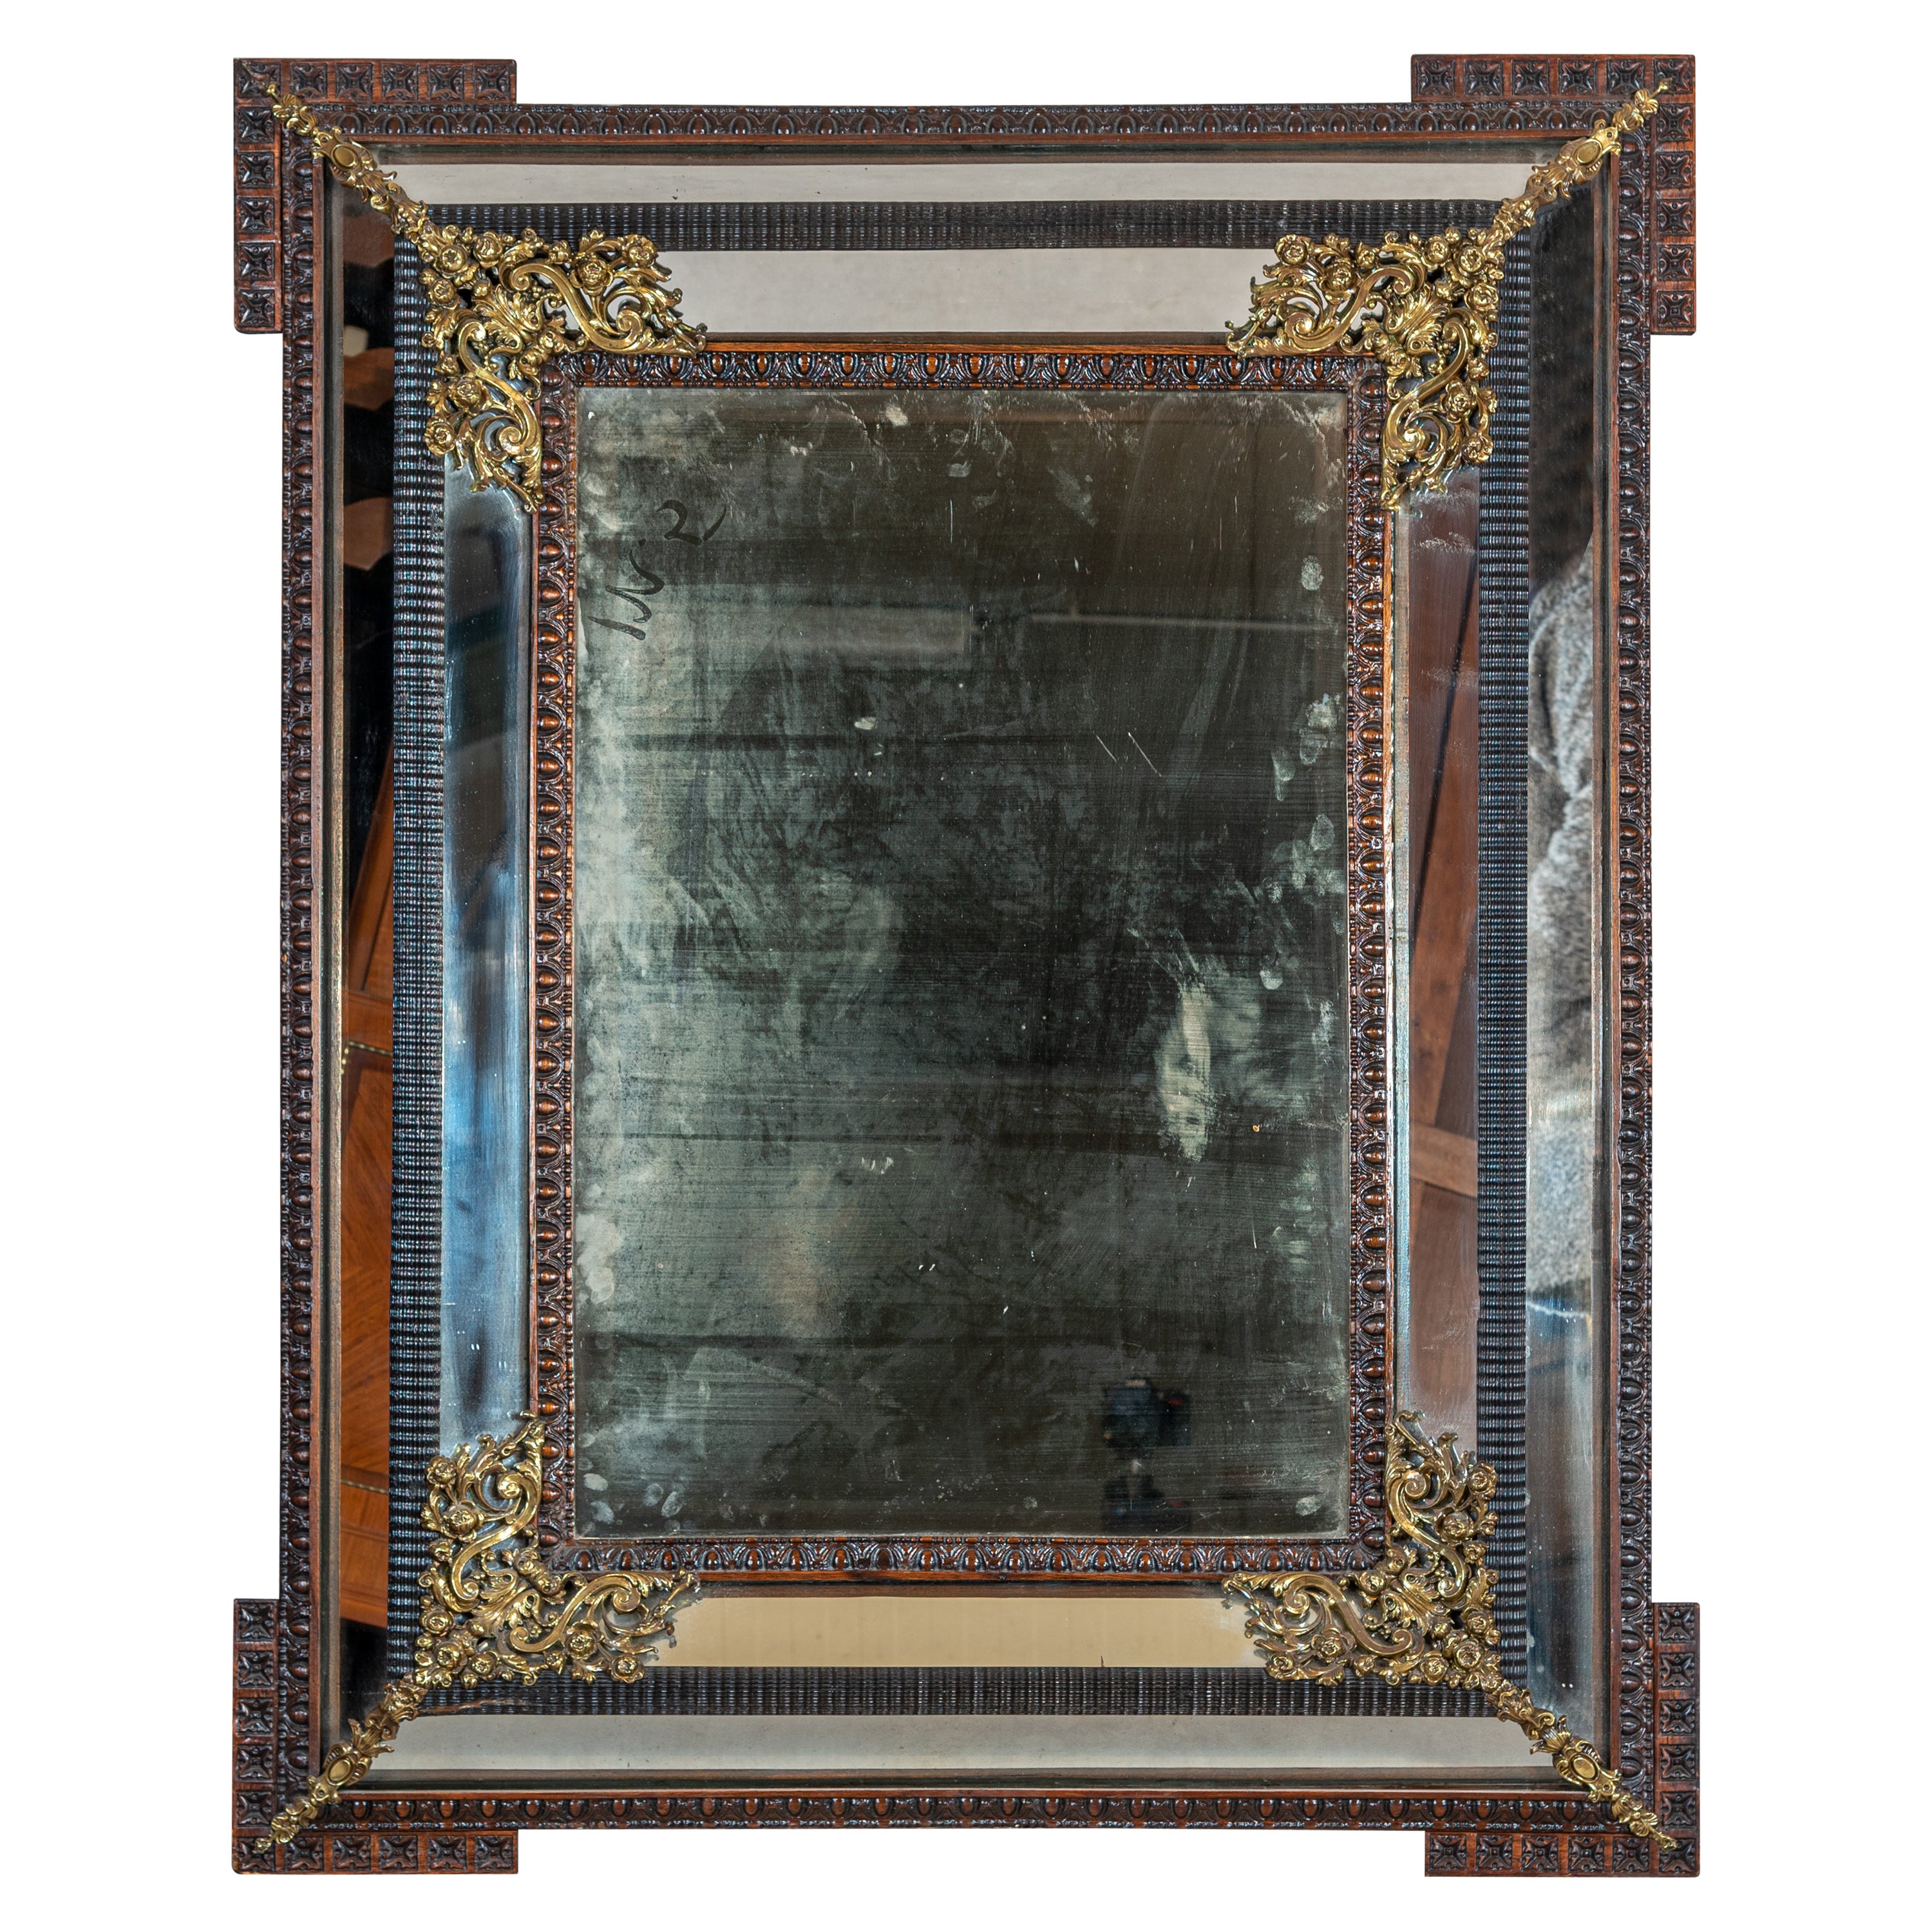 19th Century French Napoleon III Style Parecloses Mirror